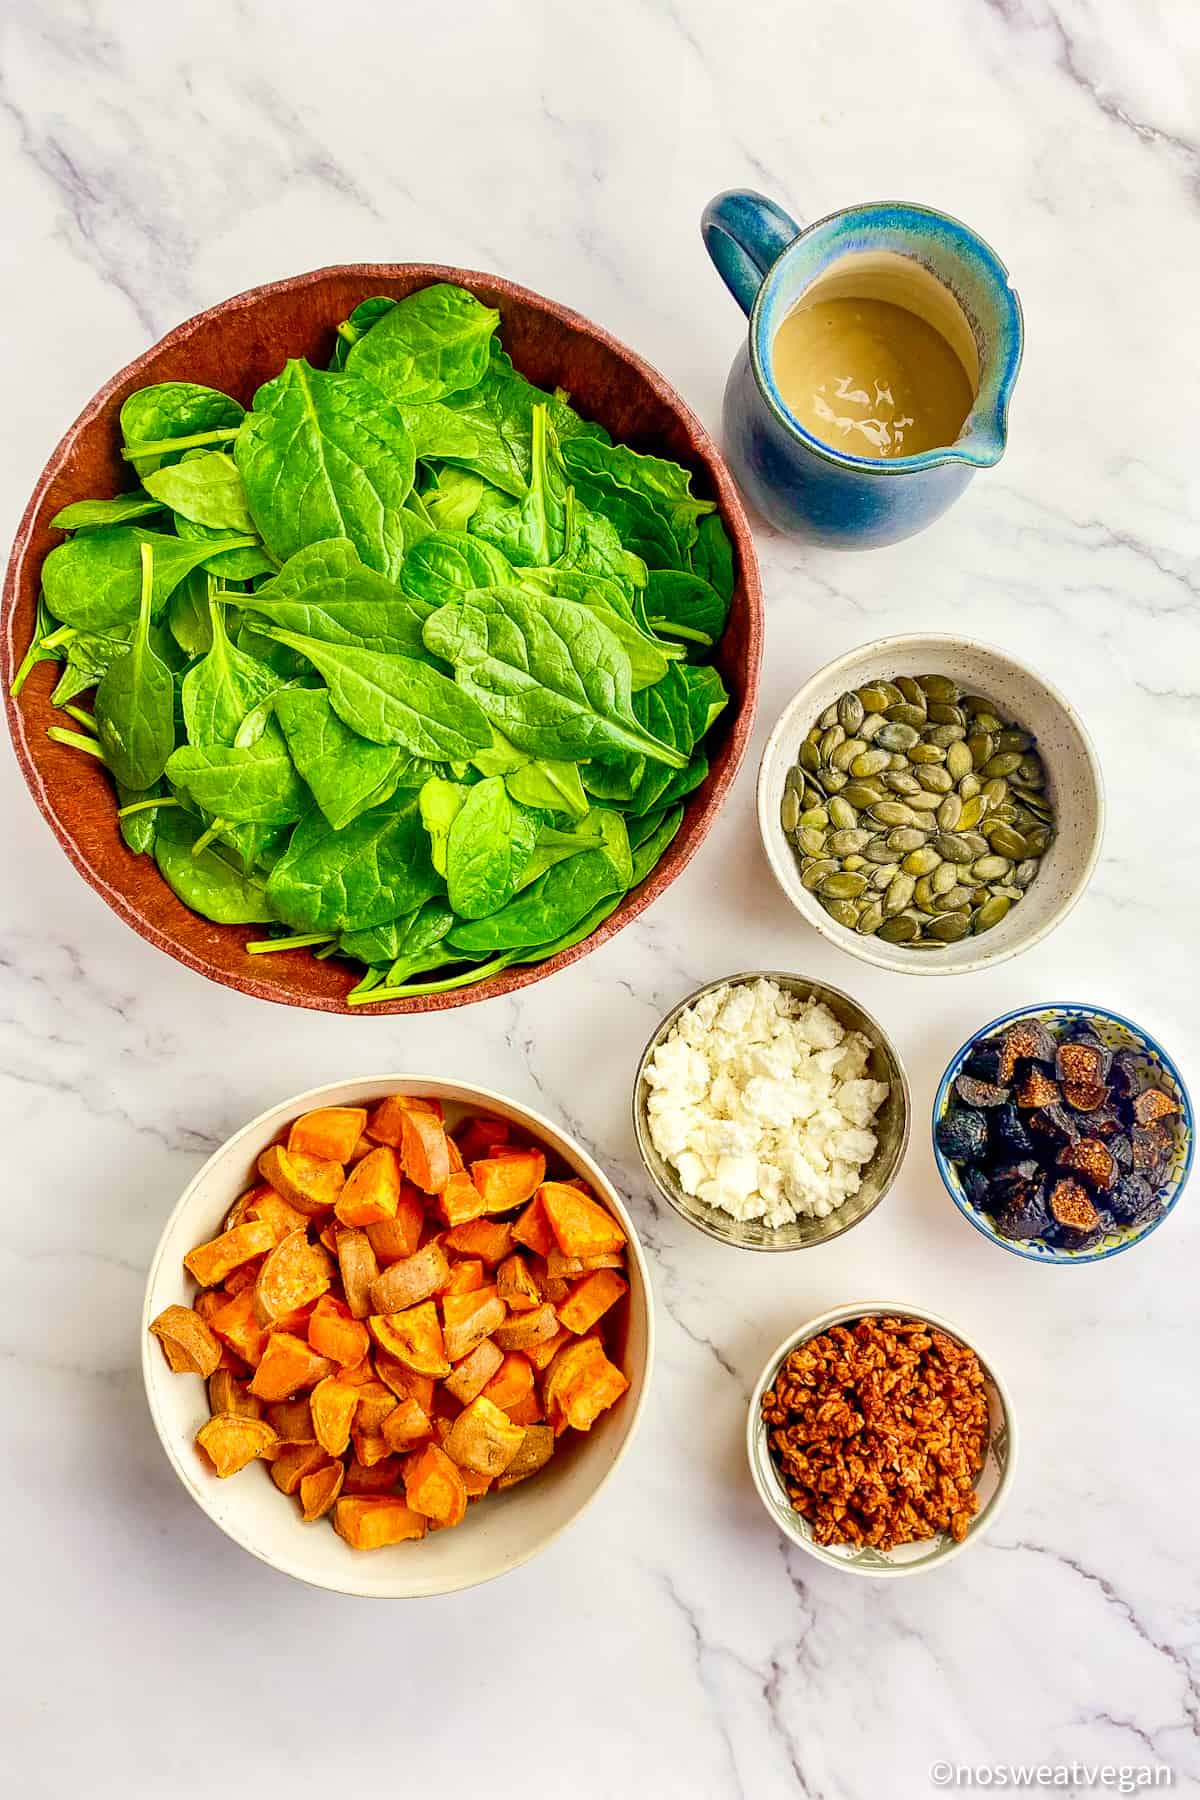 Sweet potato spinach salad ingredients.